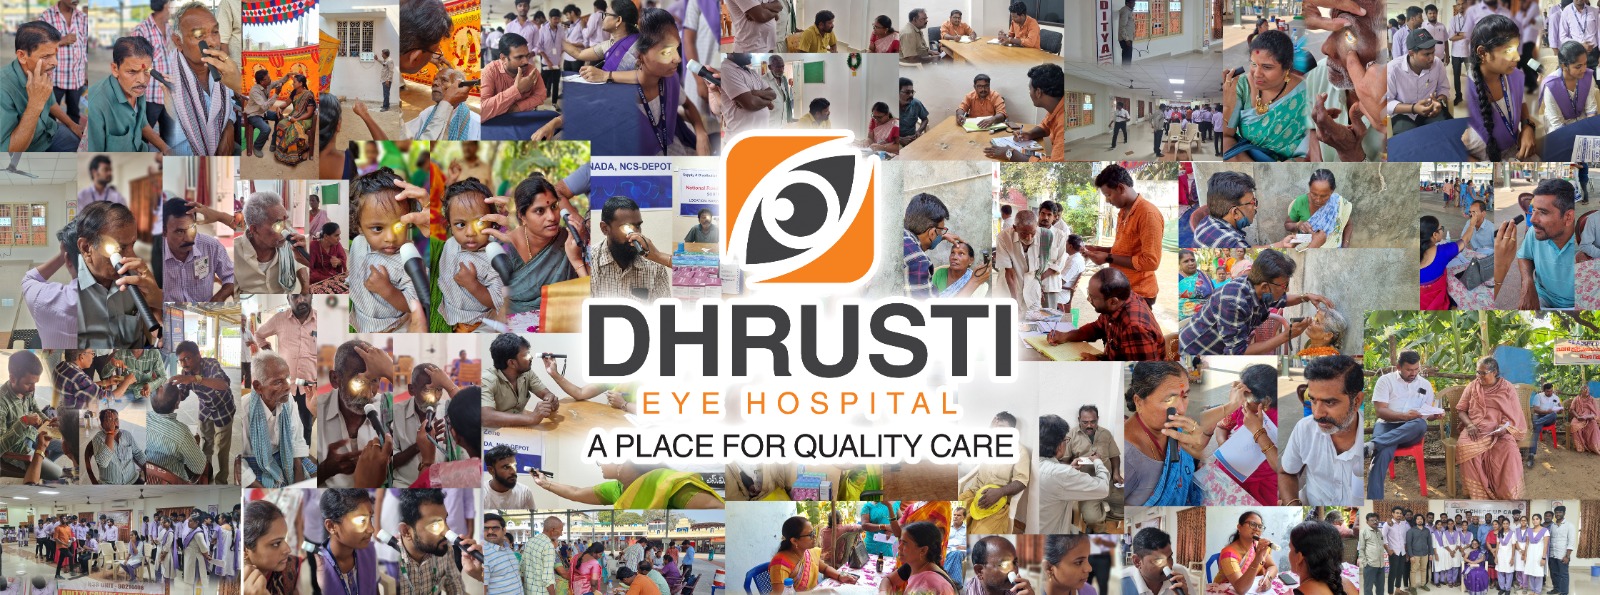 Community Outreach - Dhrusti Eye Hospital and Retina Care